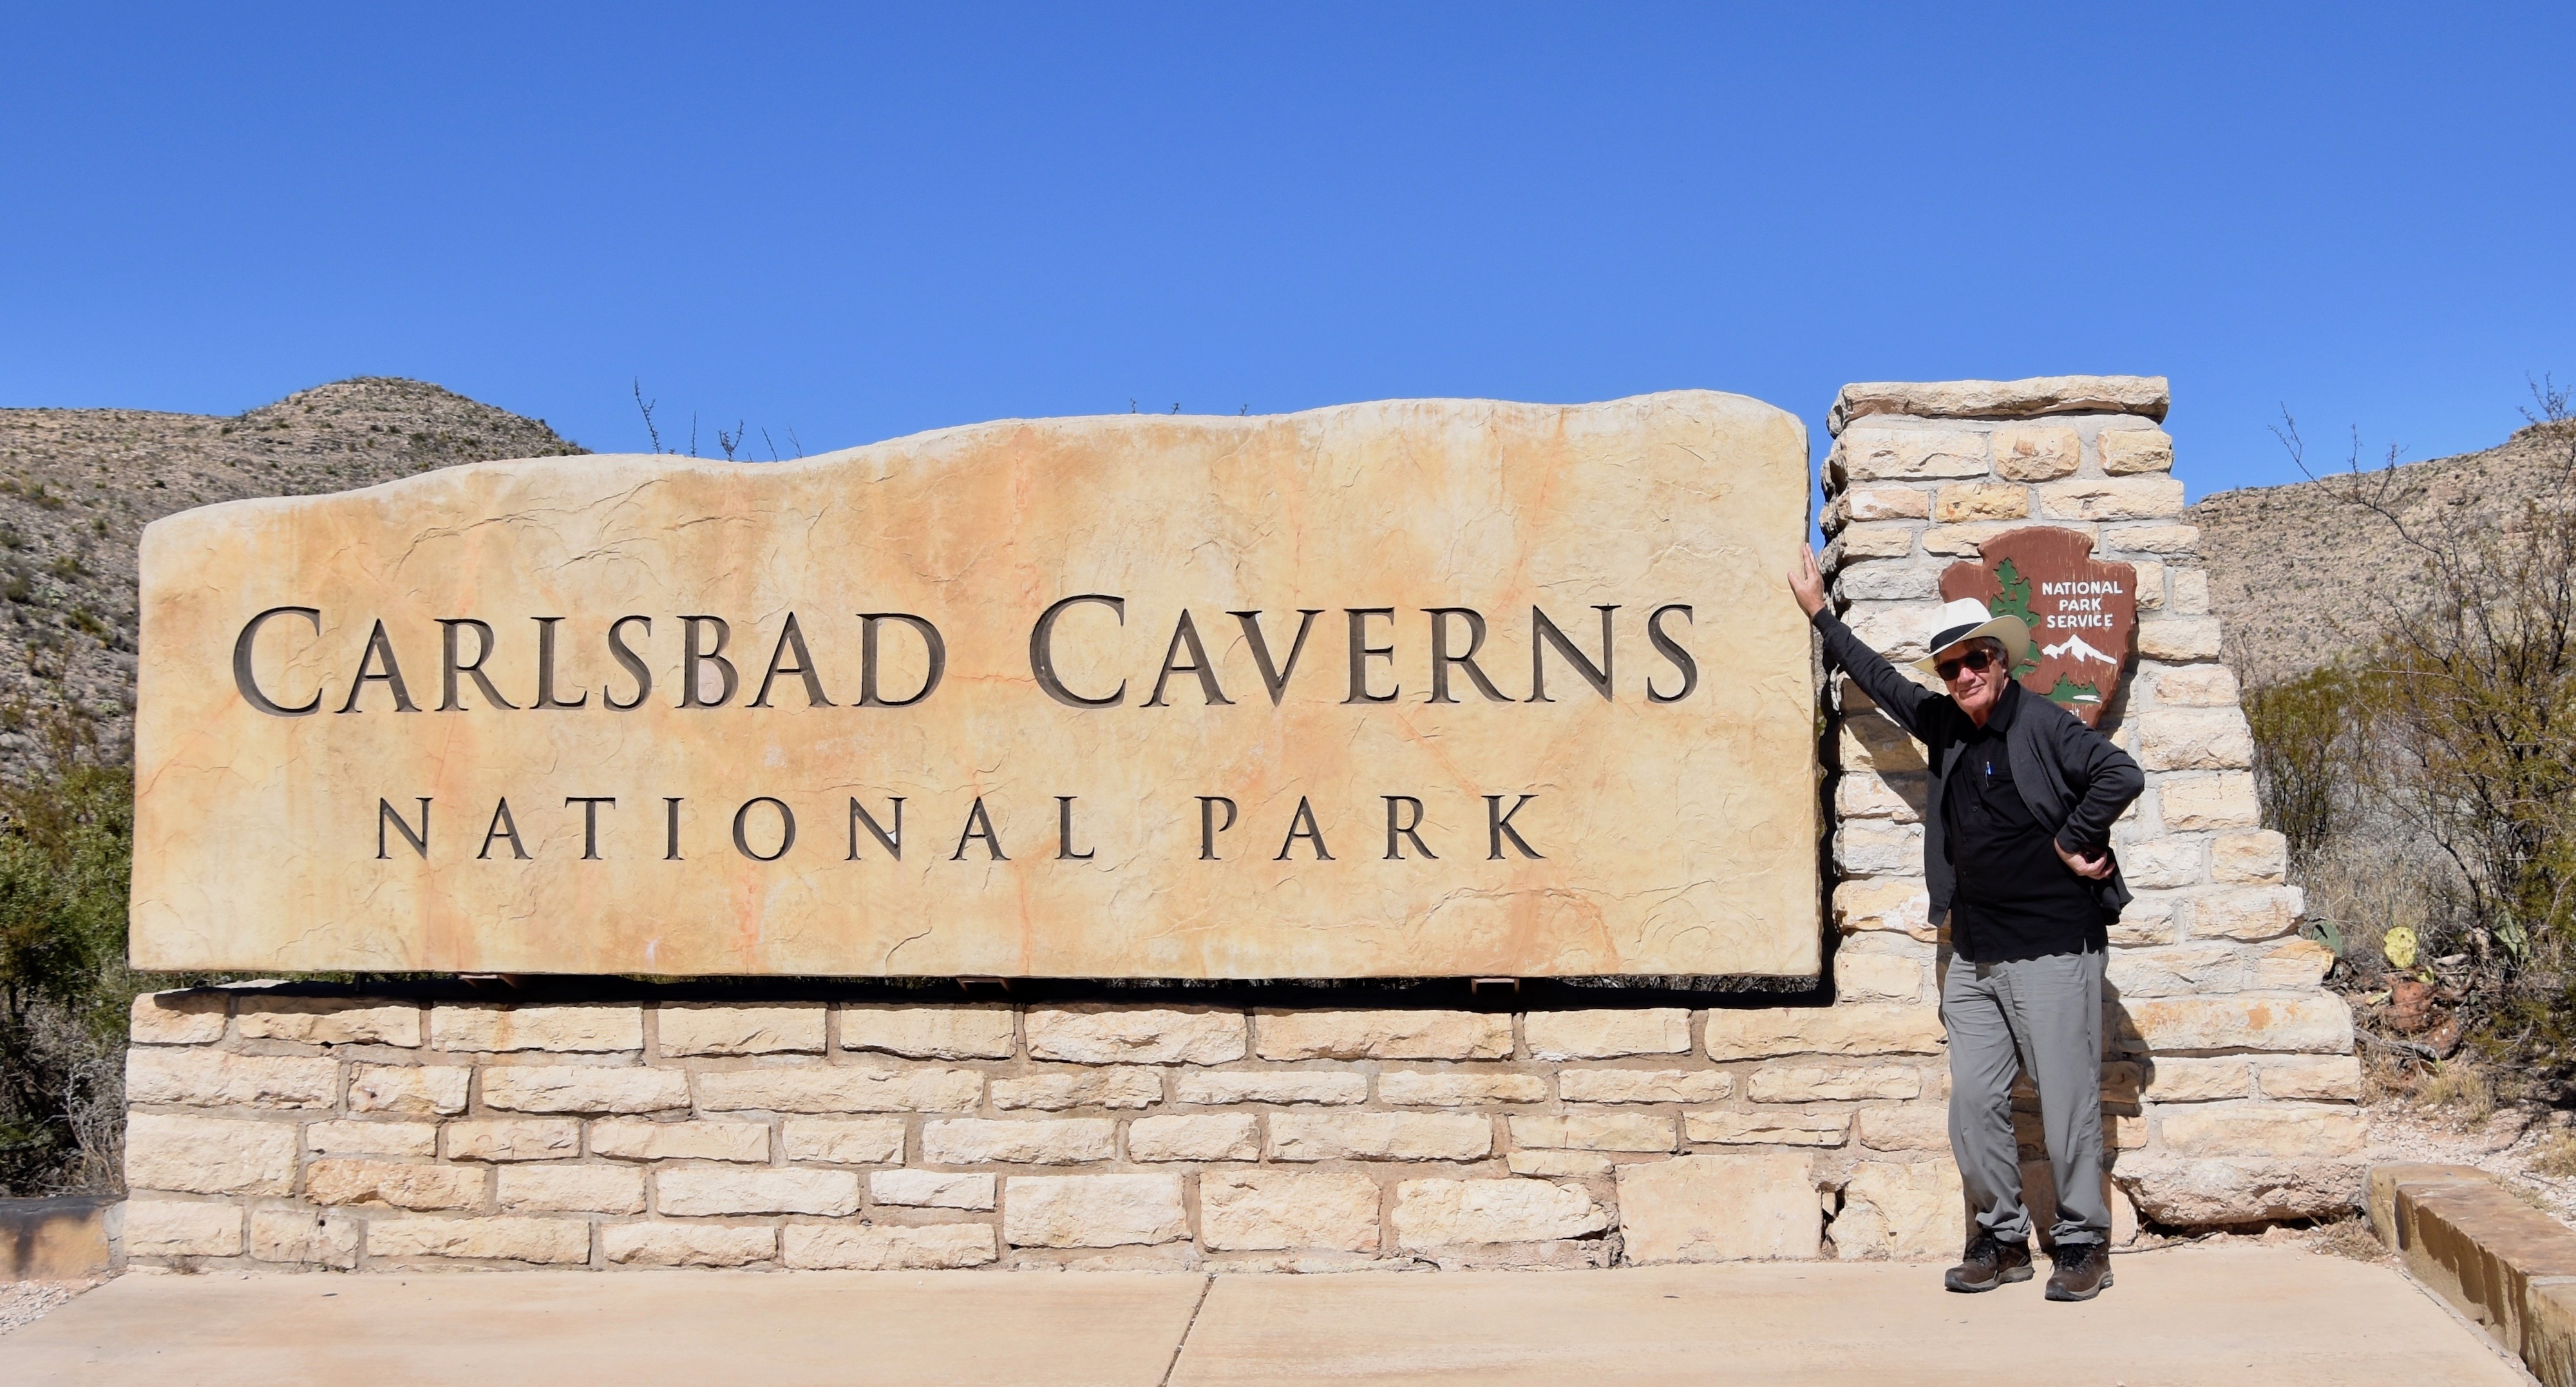 Entrance to Carlsbad Caverns National Park